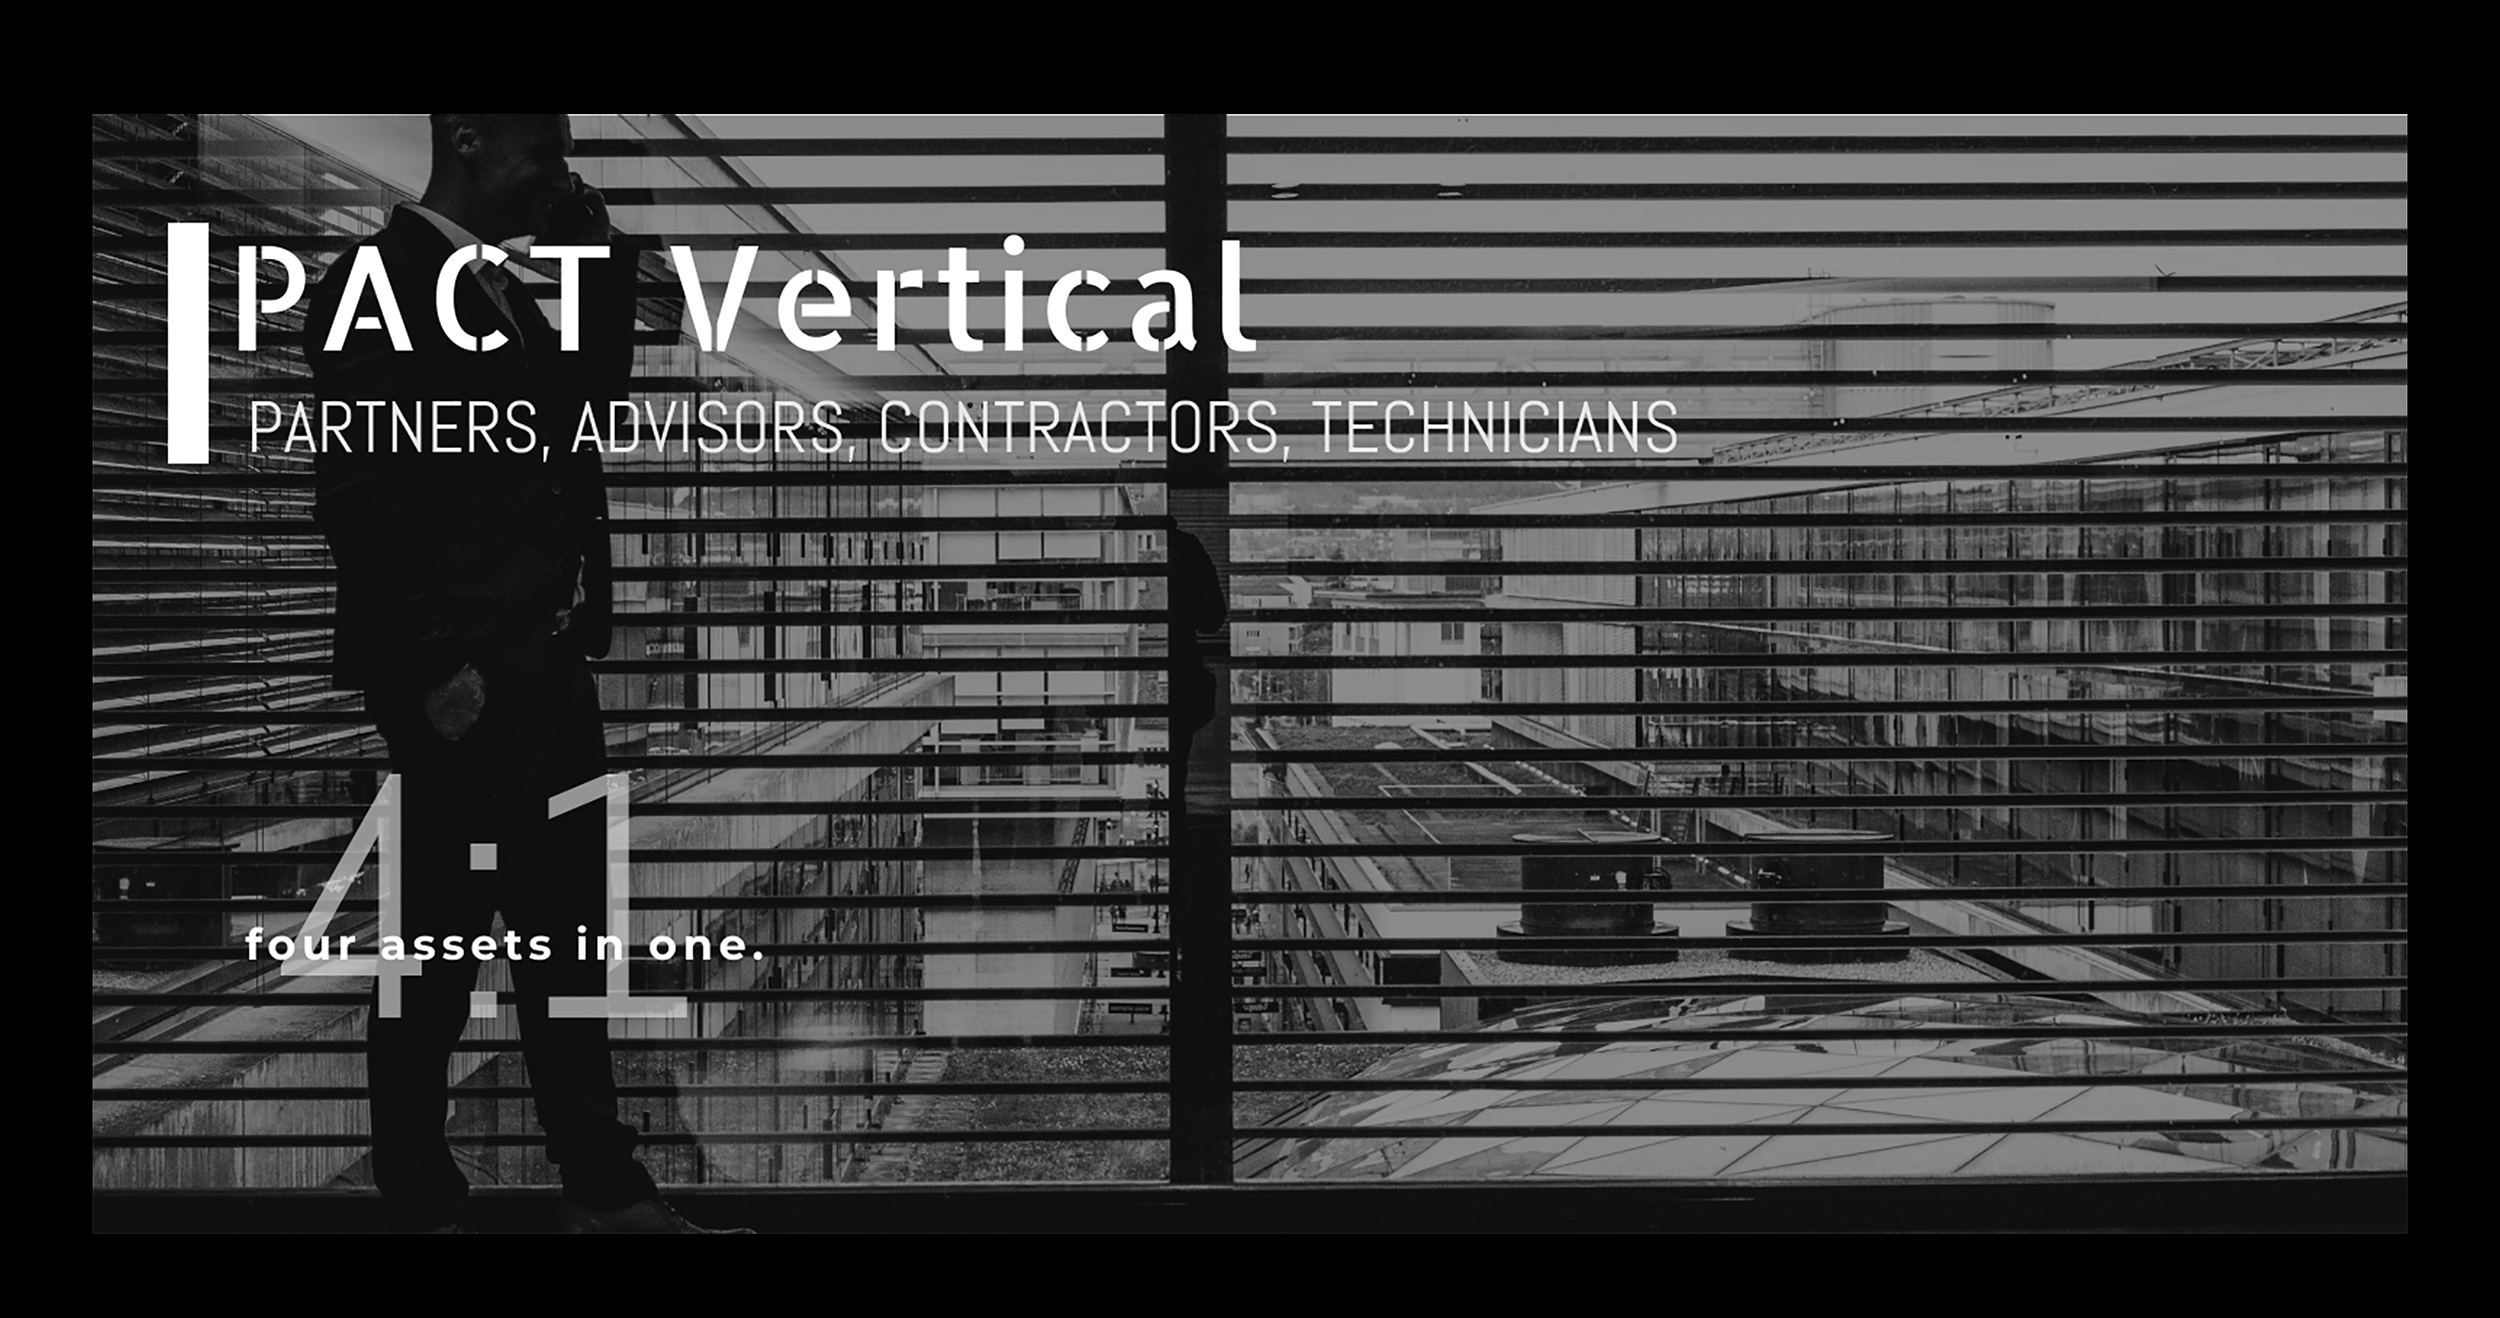 Pact Vertical Partners, advisors, contractors, technicians